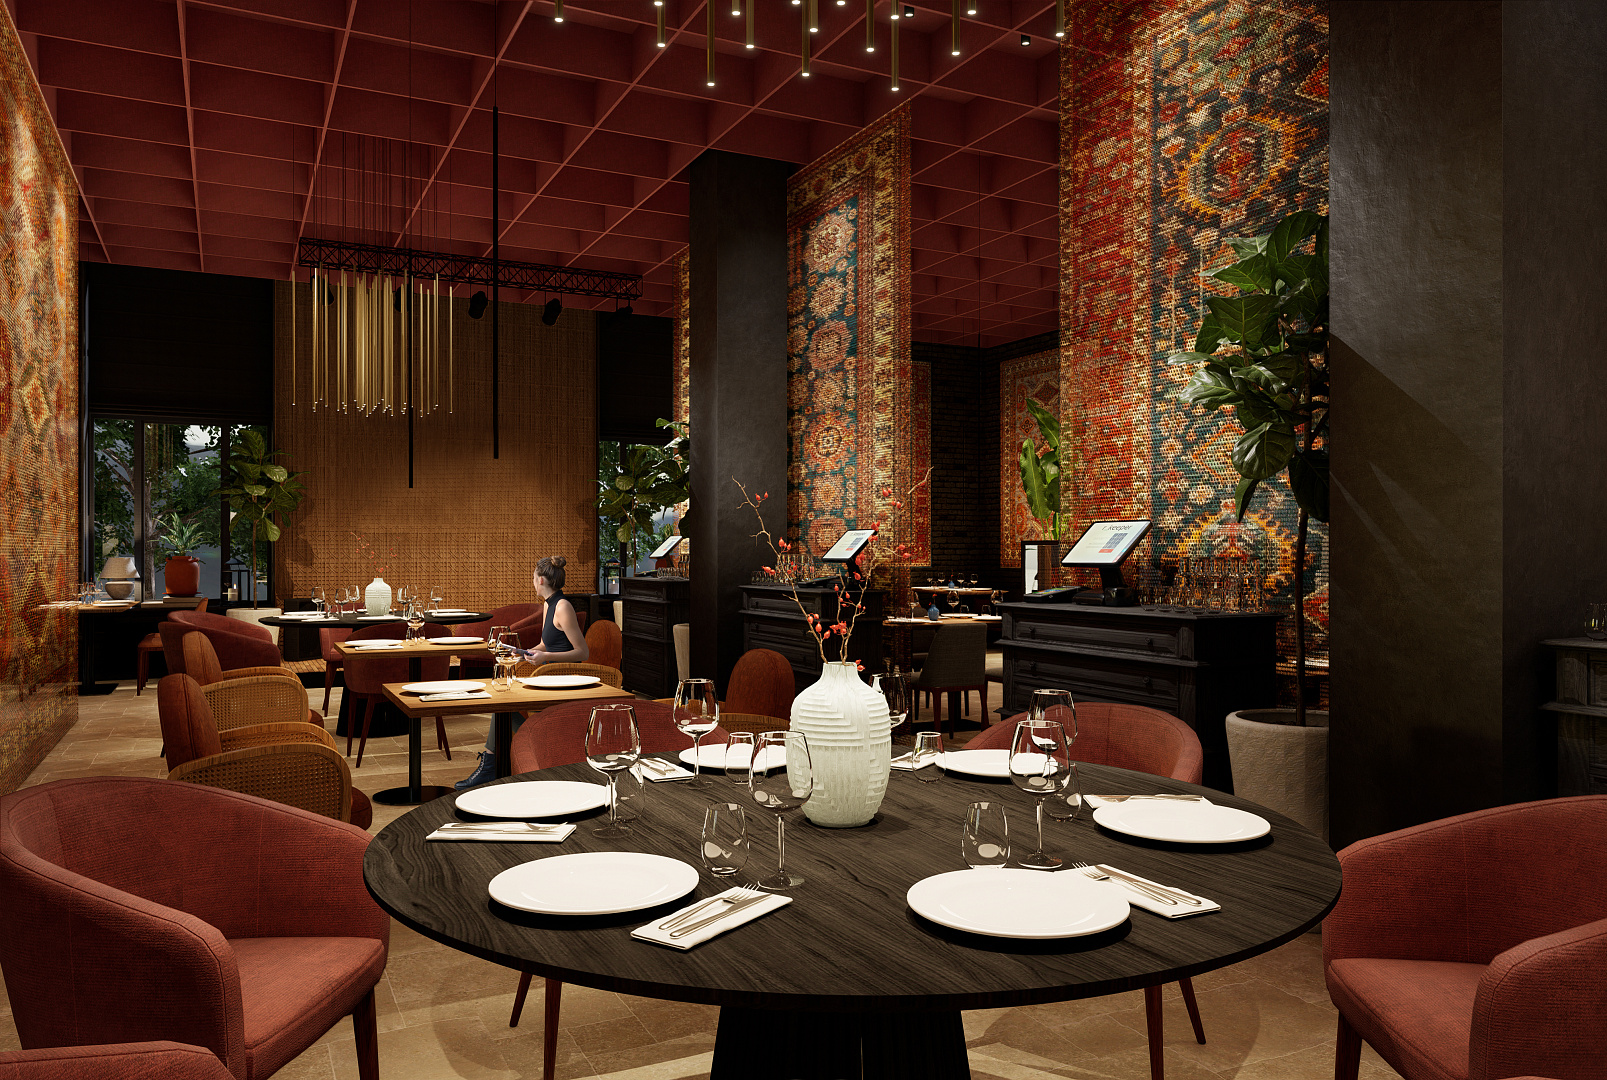 GRANAT Restaurant by PROJECT architectural bureau